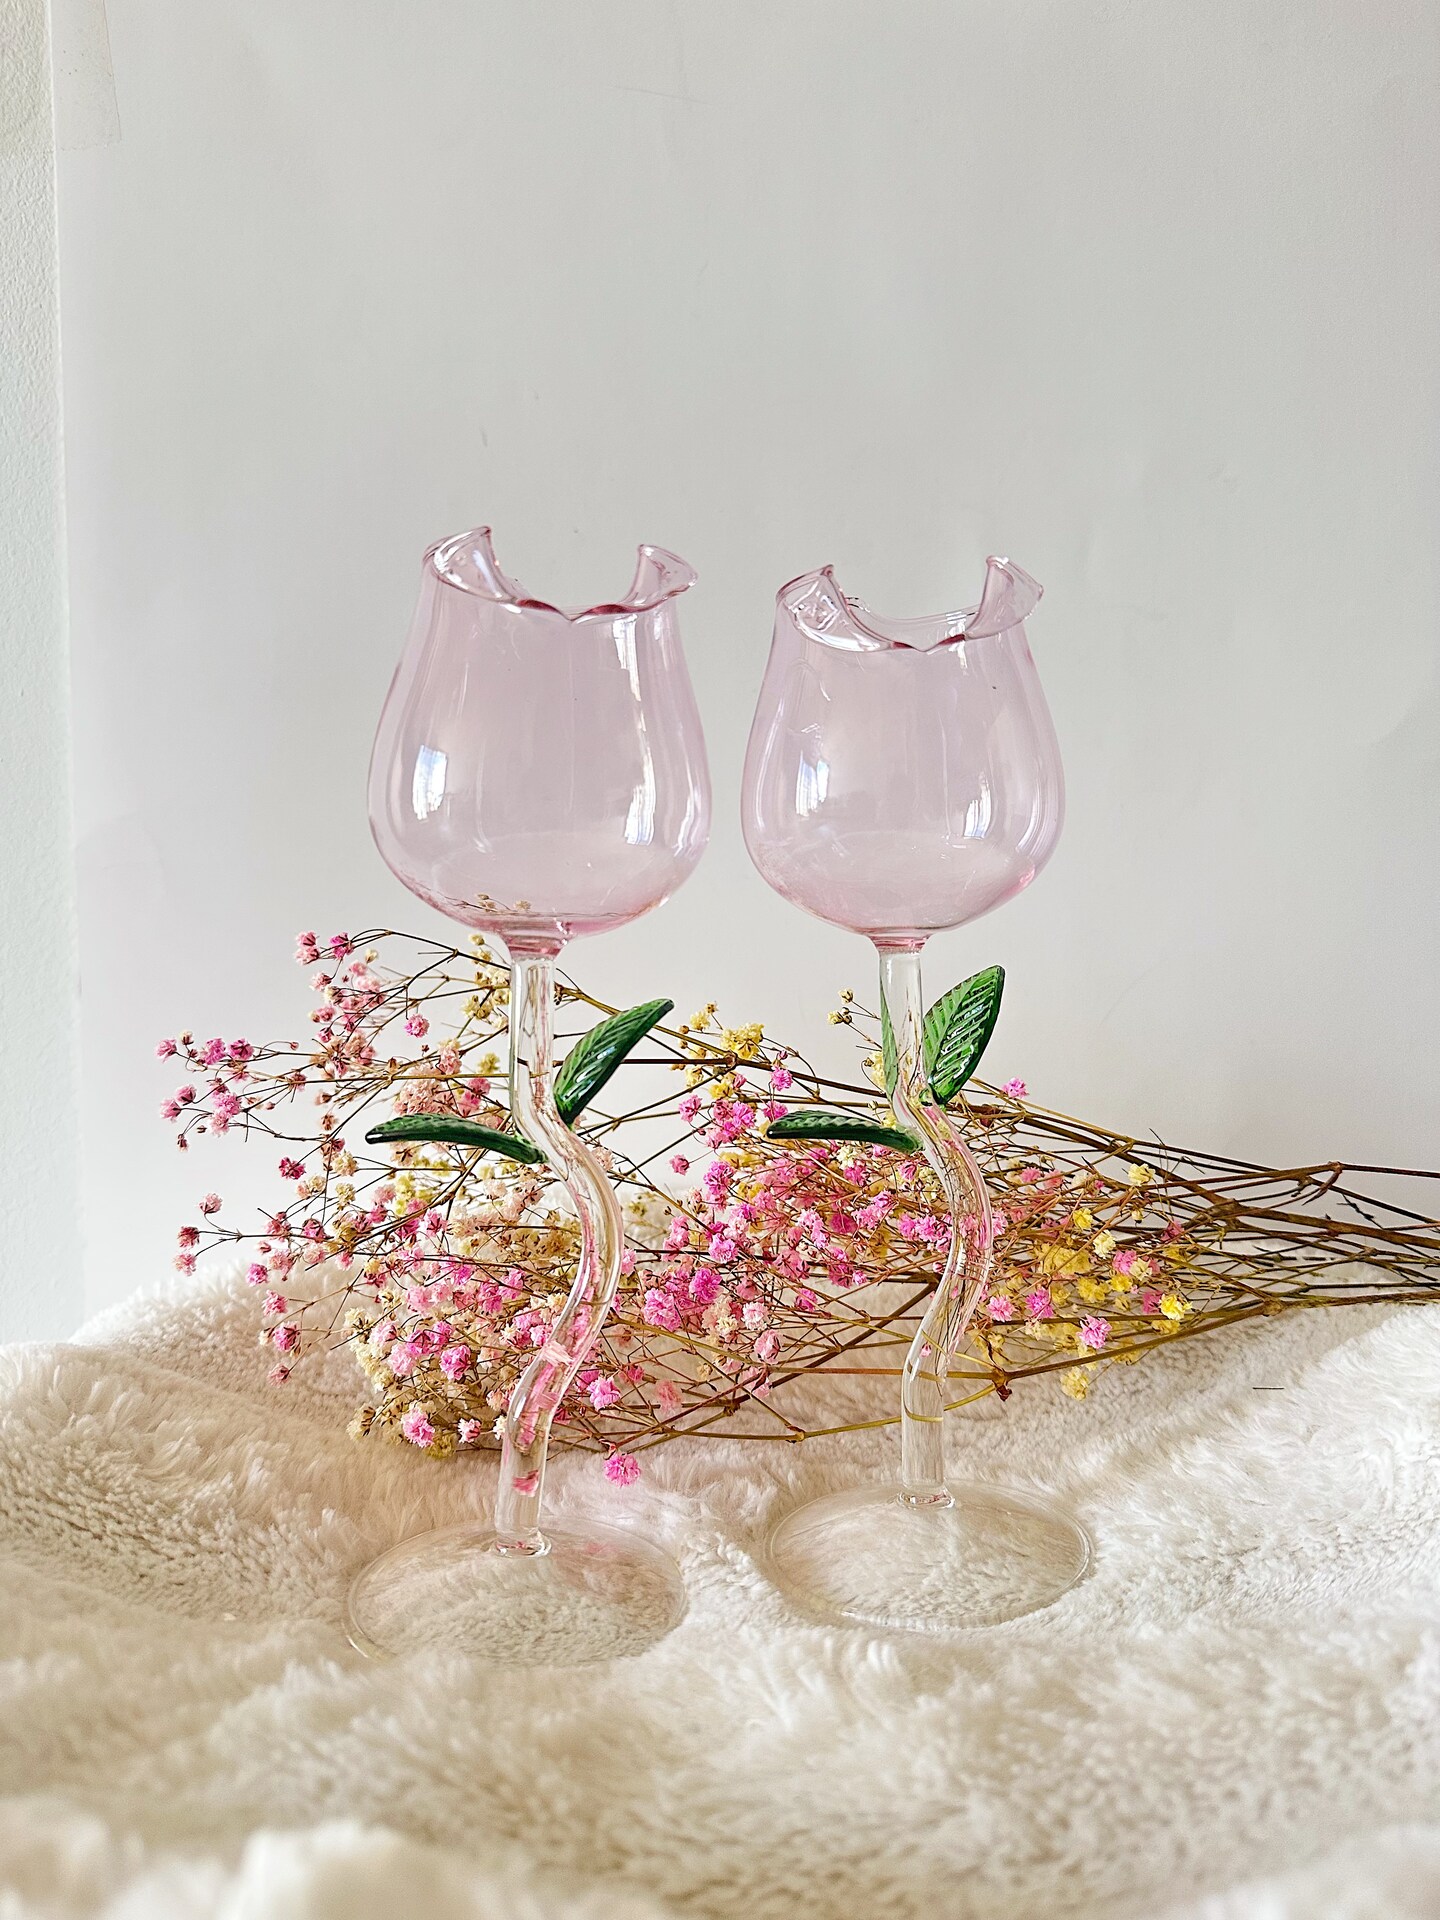 Rose-Shaped Wine Glass, Elegant Floral Wine Glass, Handmade Flower Glass, Flower-Inspired Home Barware, Personalized Handmade Wine Glasses 270424673698119681